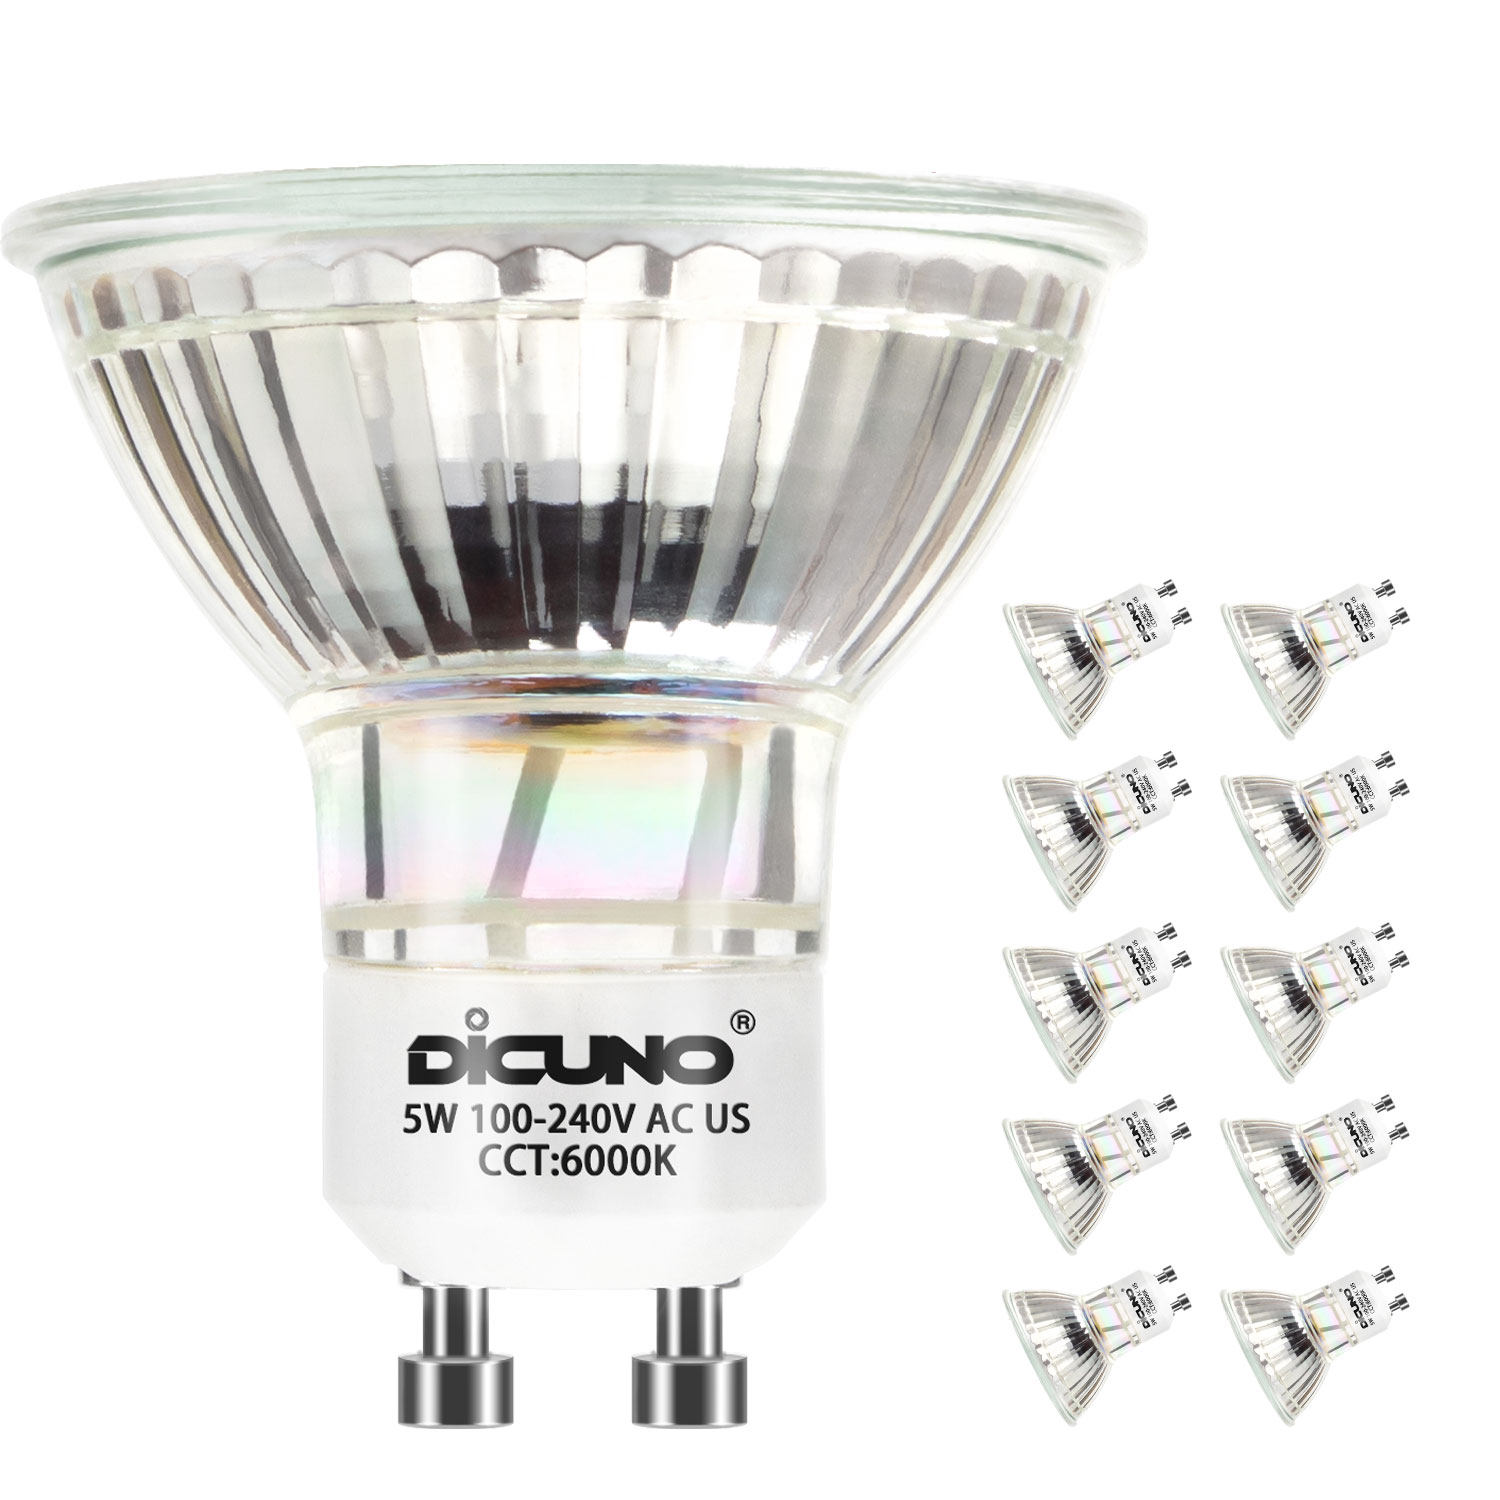 DiCUNO GU10 LED Lampen 5W, Warmweiß 2700K, MR16 LED Reflektor ersatz 50W  Halogenbirne, 400LM, GU10 LED Strahler nicht dimmbar, kein Flackern, 85Ra